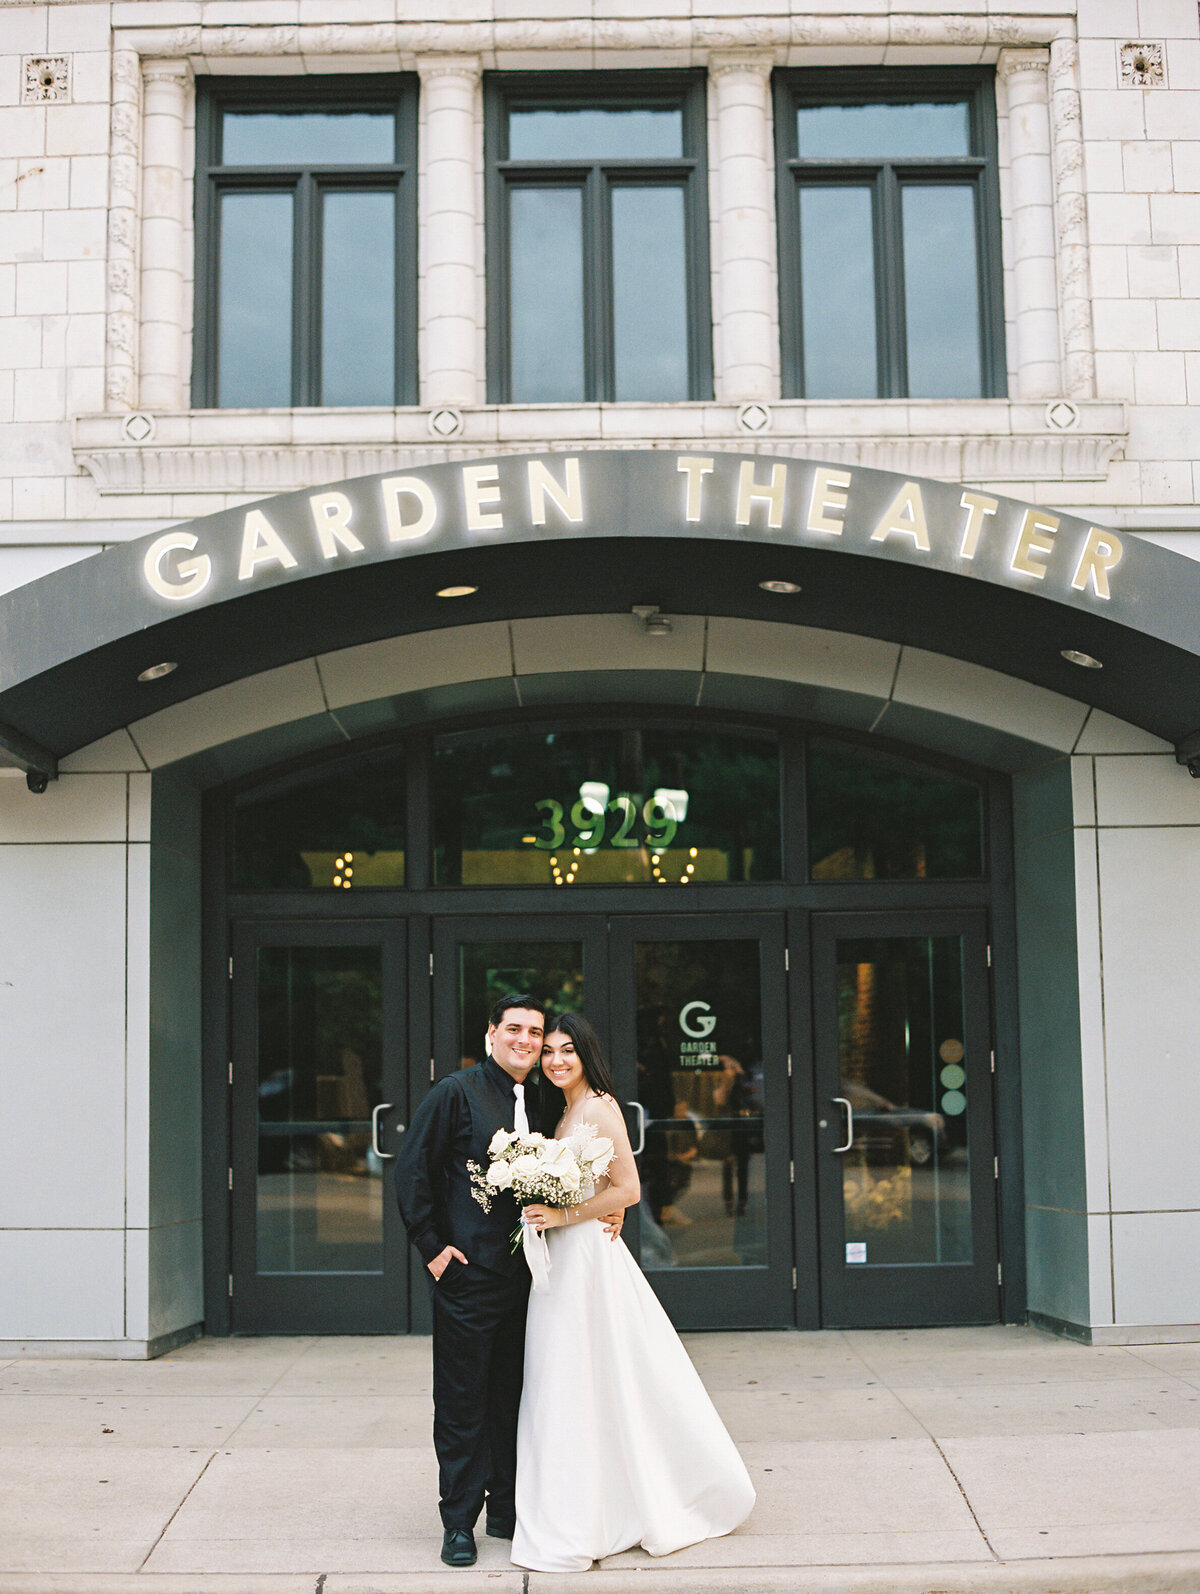 Alyssa Amez Design -  Catrina's Modern, Textural Garden Theater Wedding34